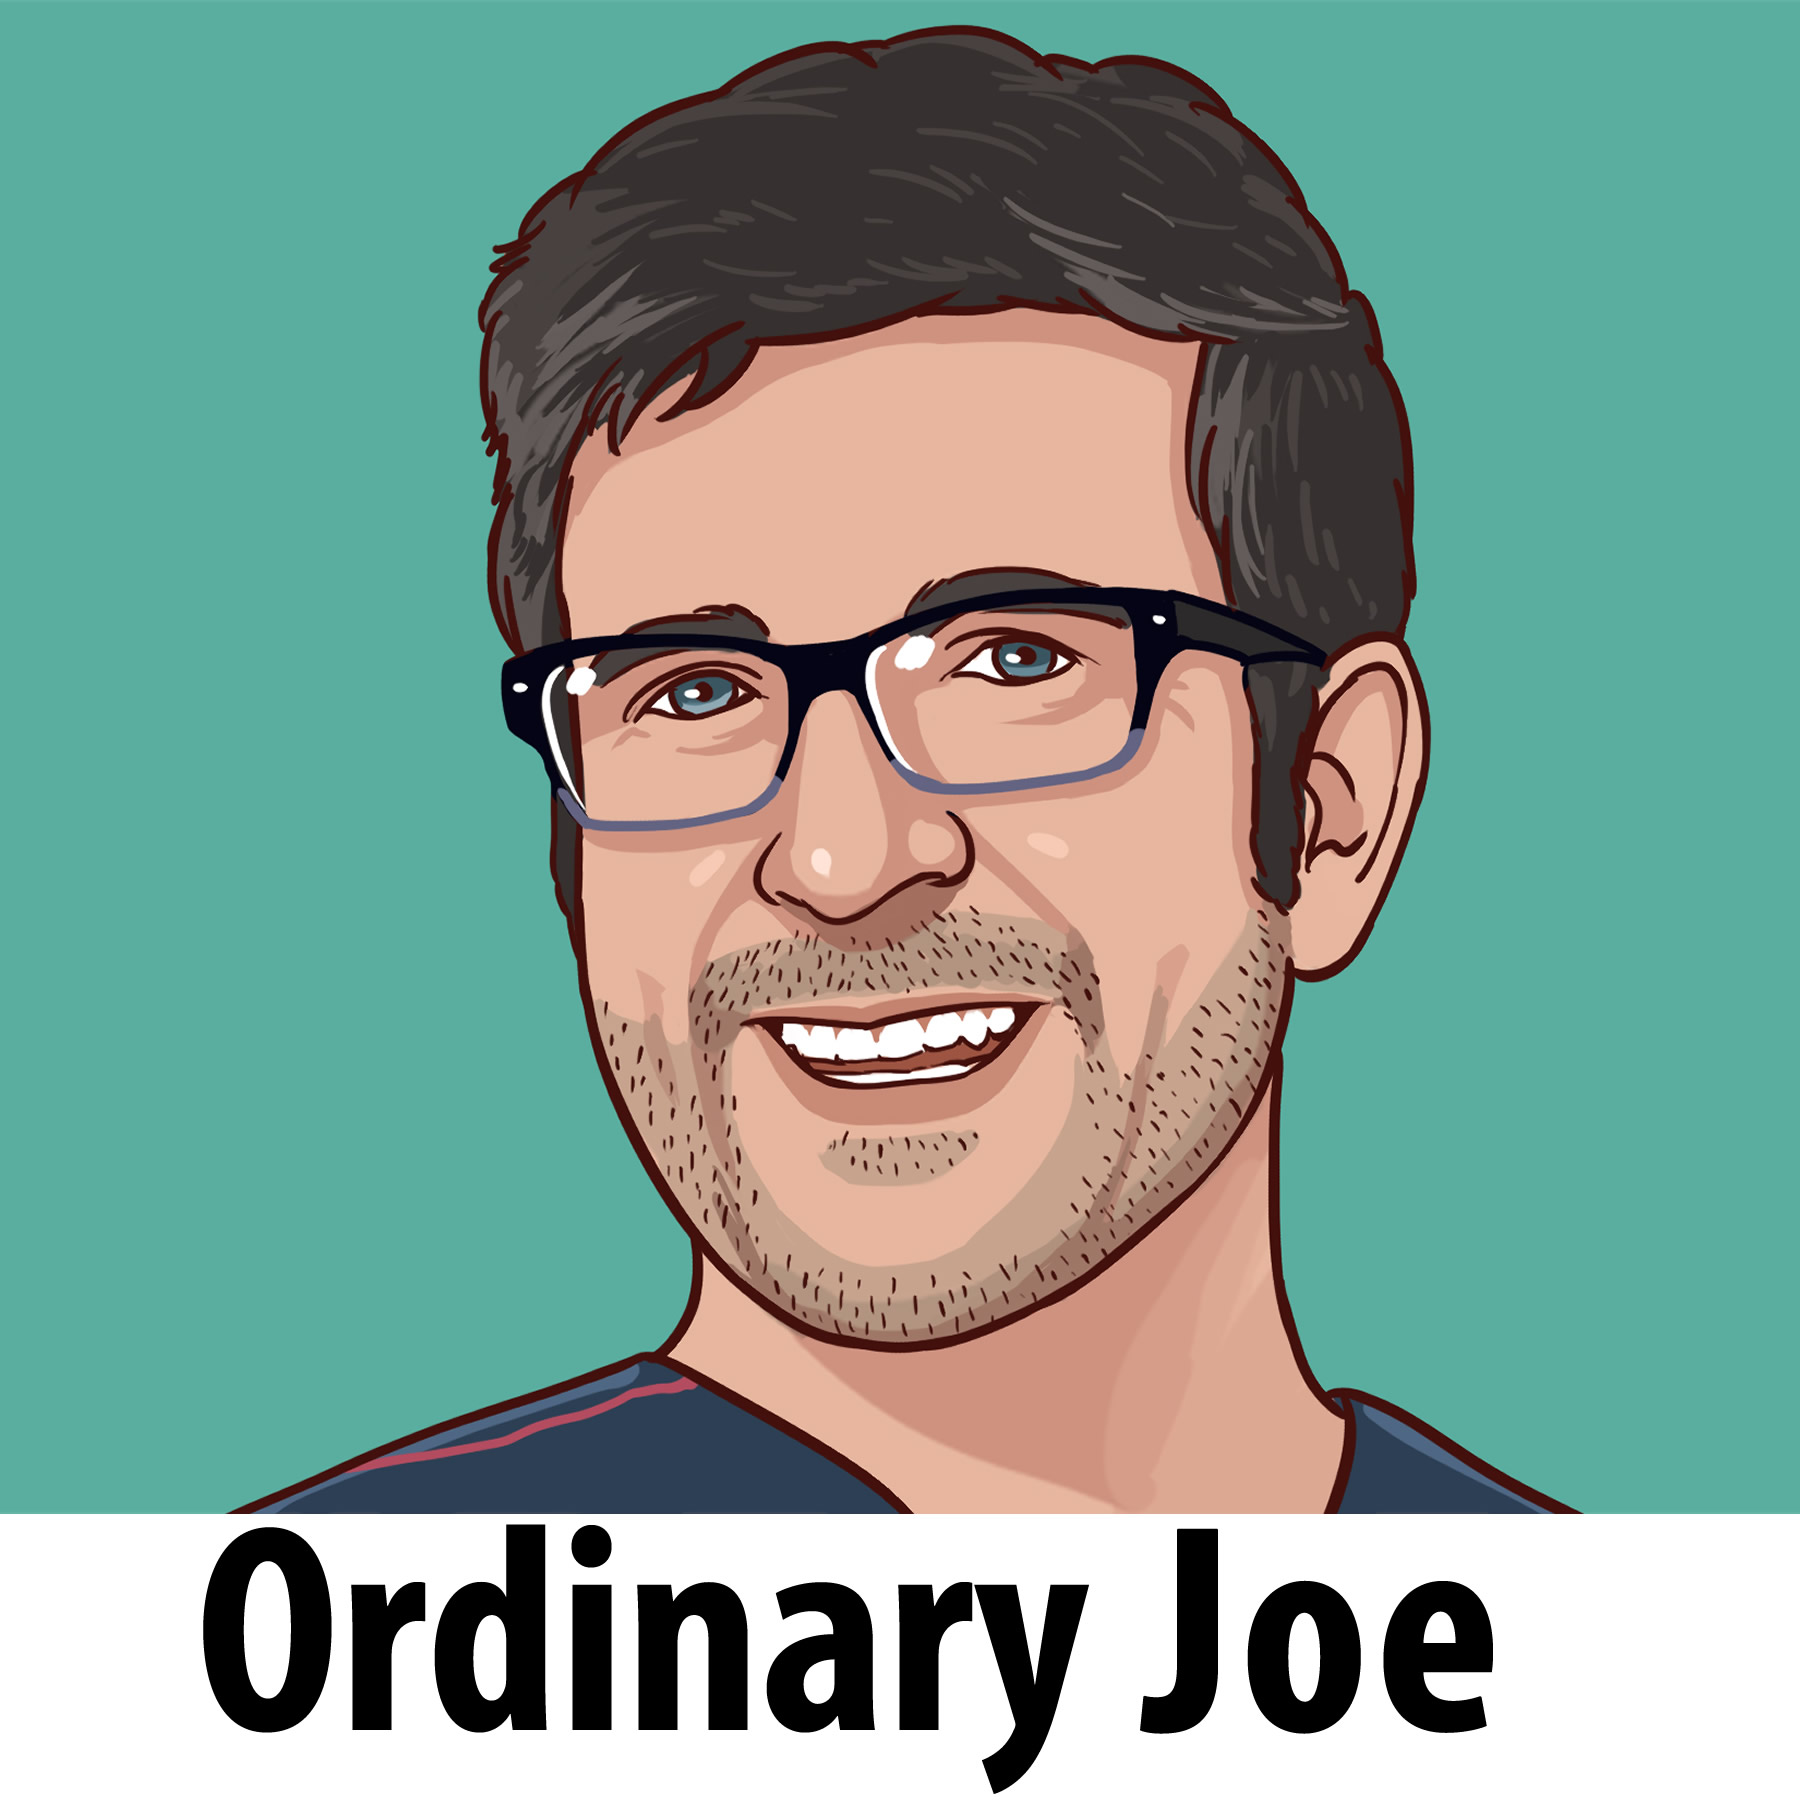 Ordinary Joe 002: A plan to rebuild a new life